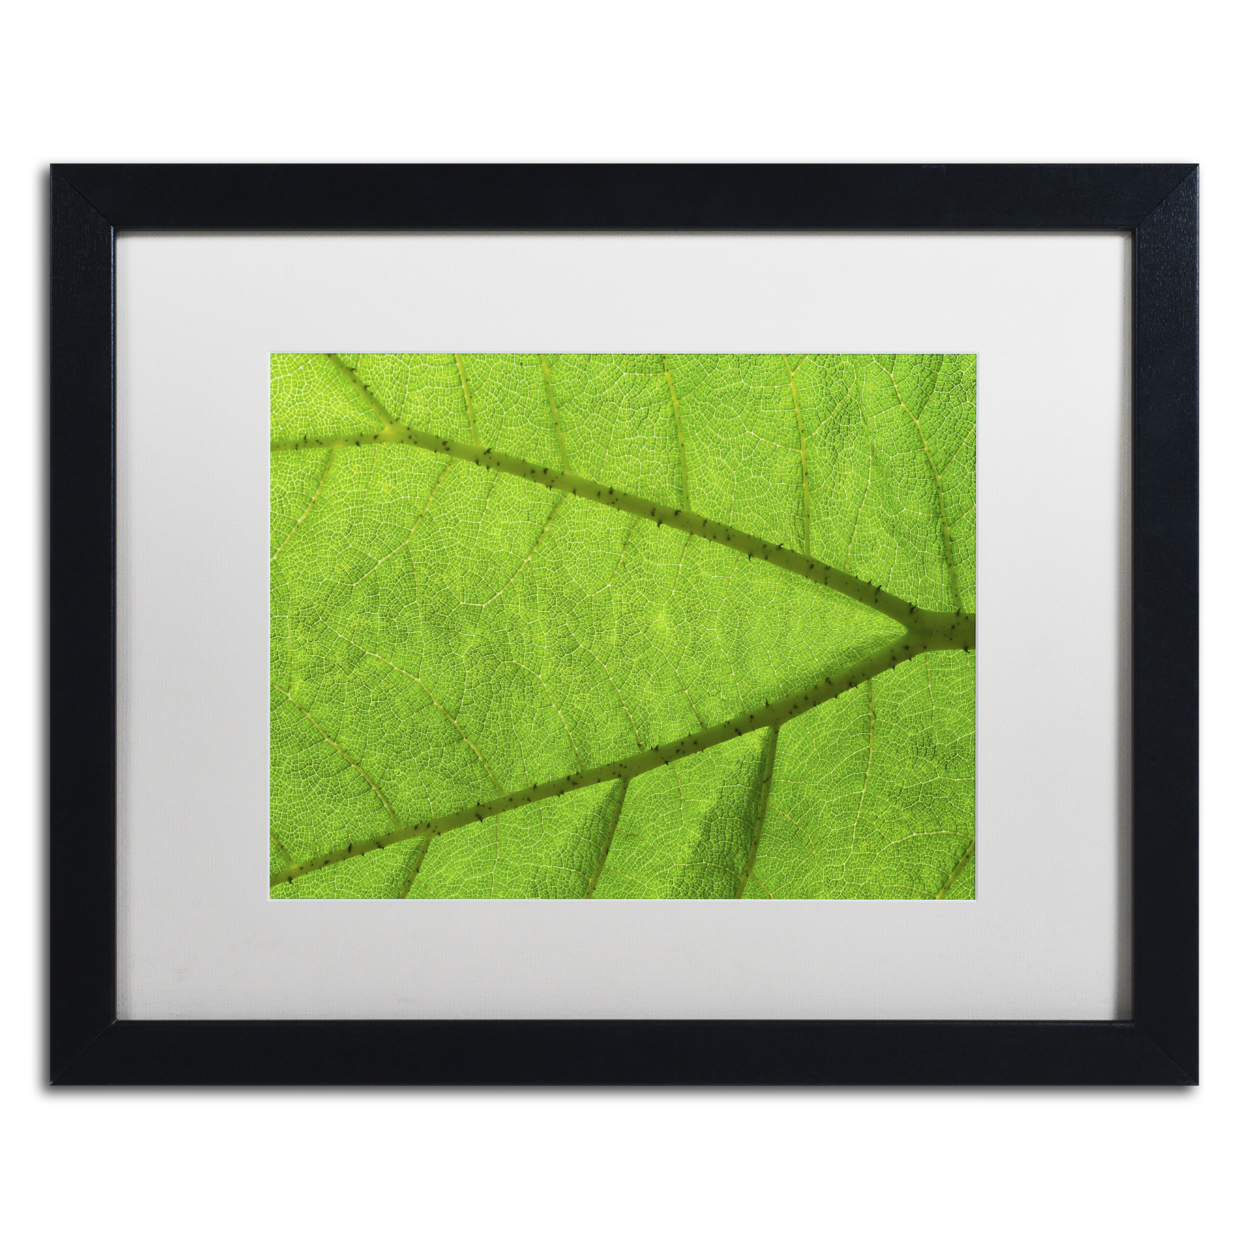 Cora Niele 'Leaf Texture IV' Black Wooden Framed Art 18 X 22 Inches